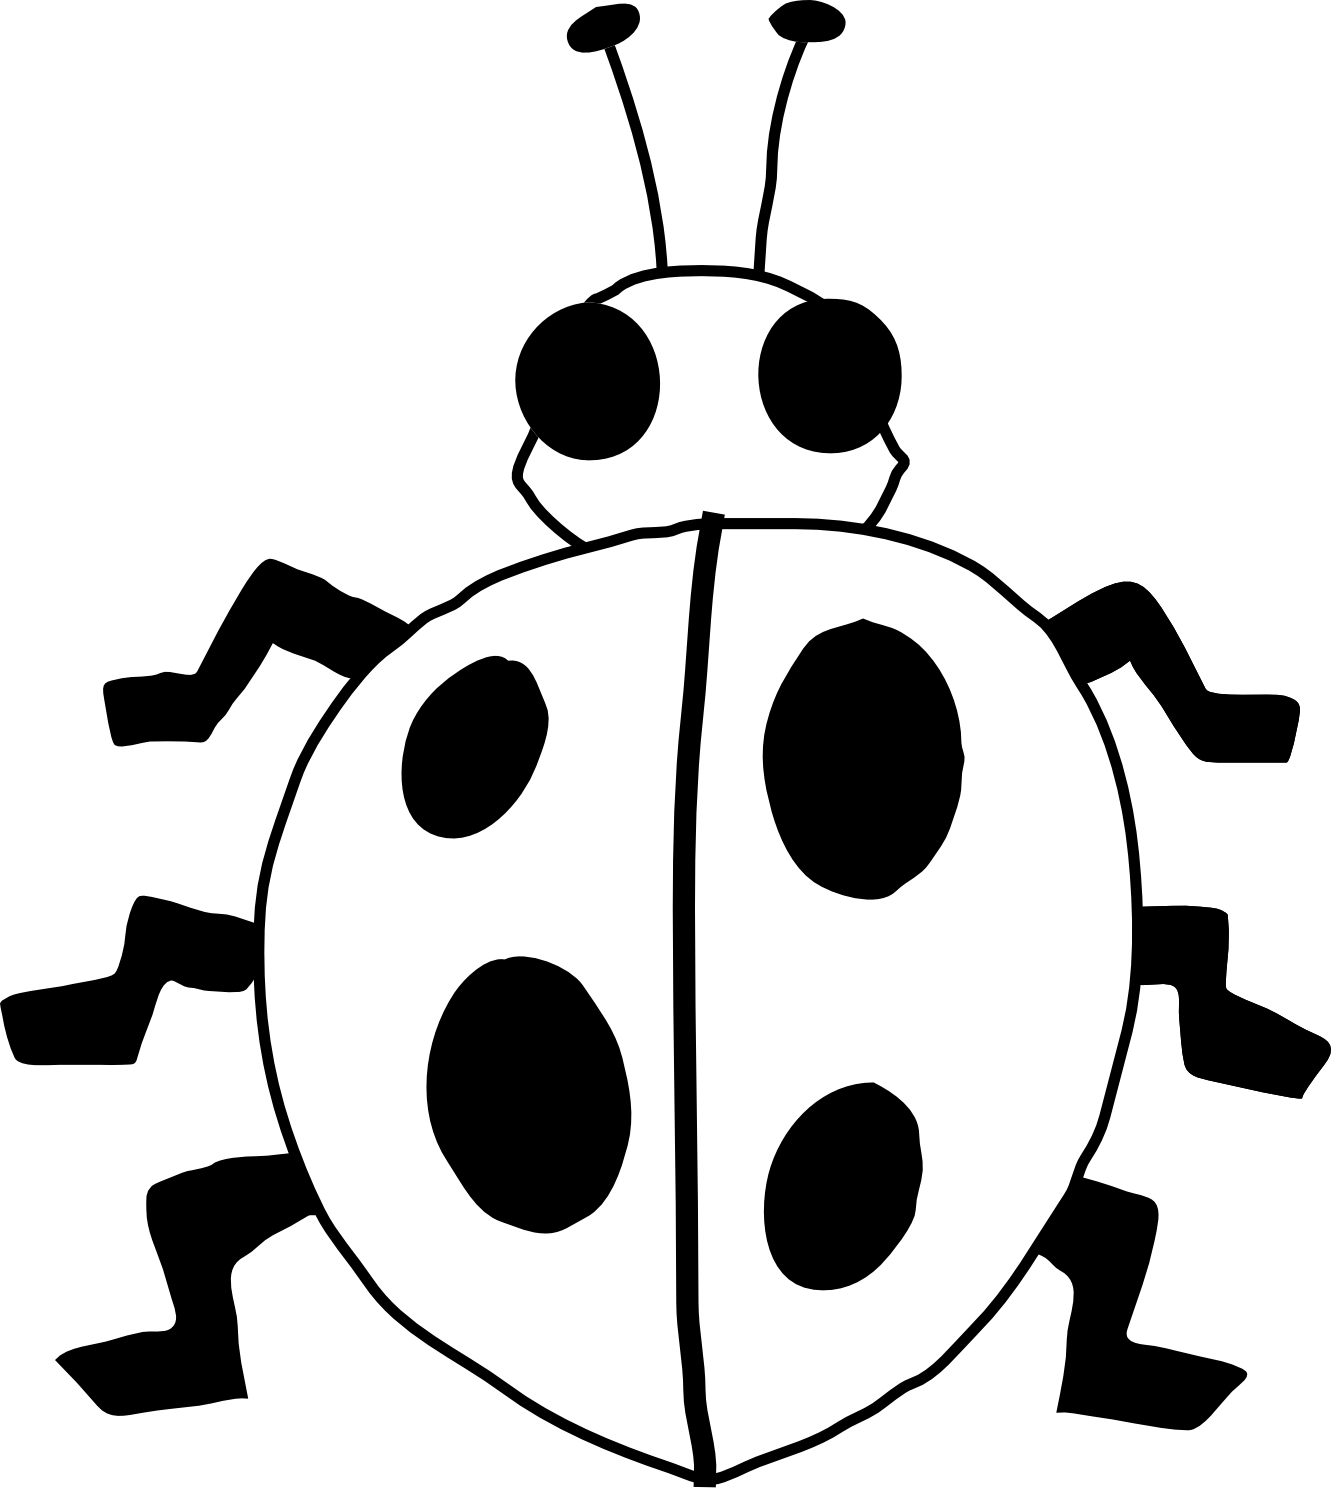 ladybug 21 black white line art flower scalable vector graphics 